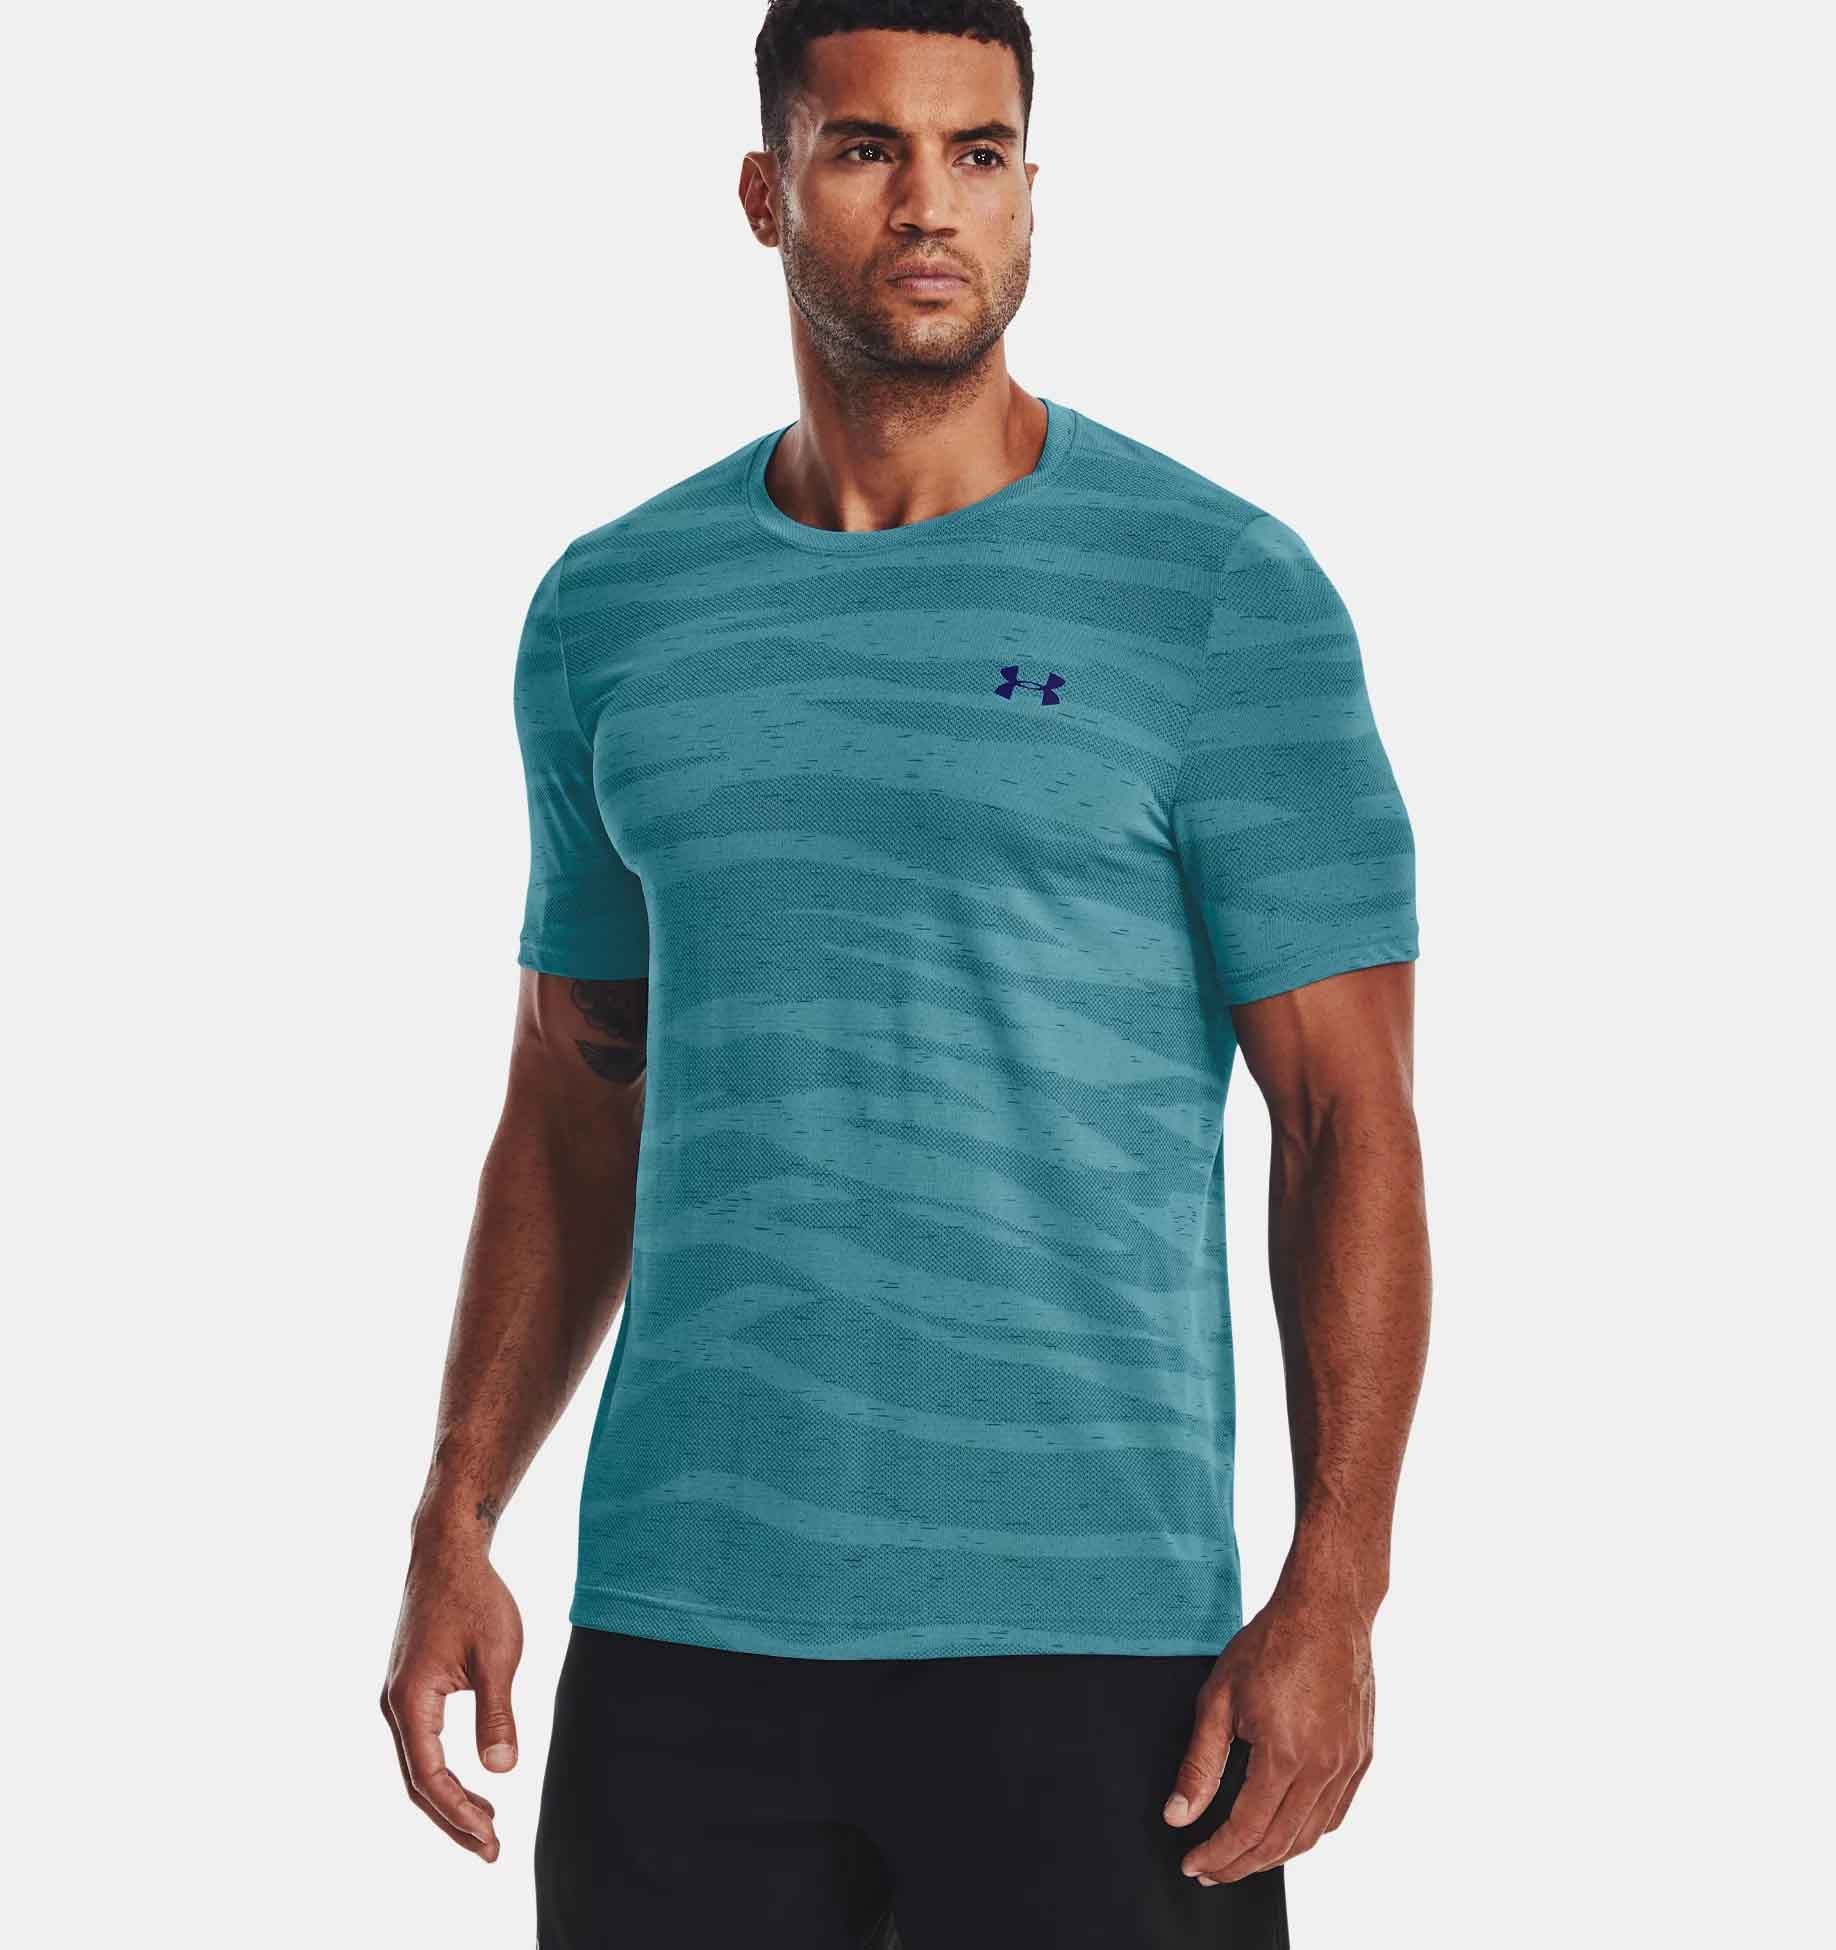 UA Seamless Wave short-sleeved shirt